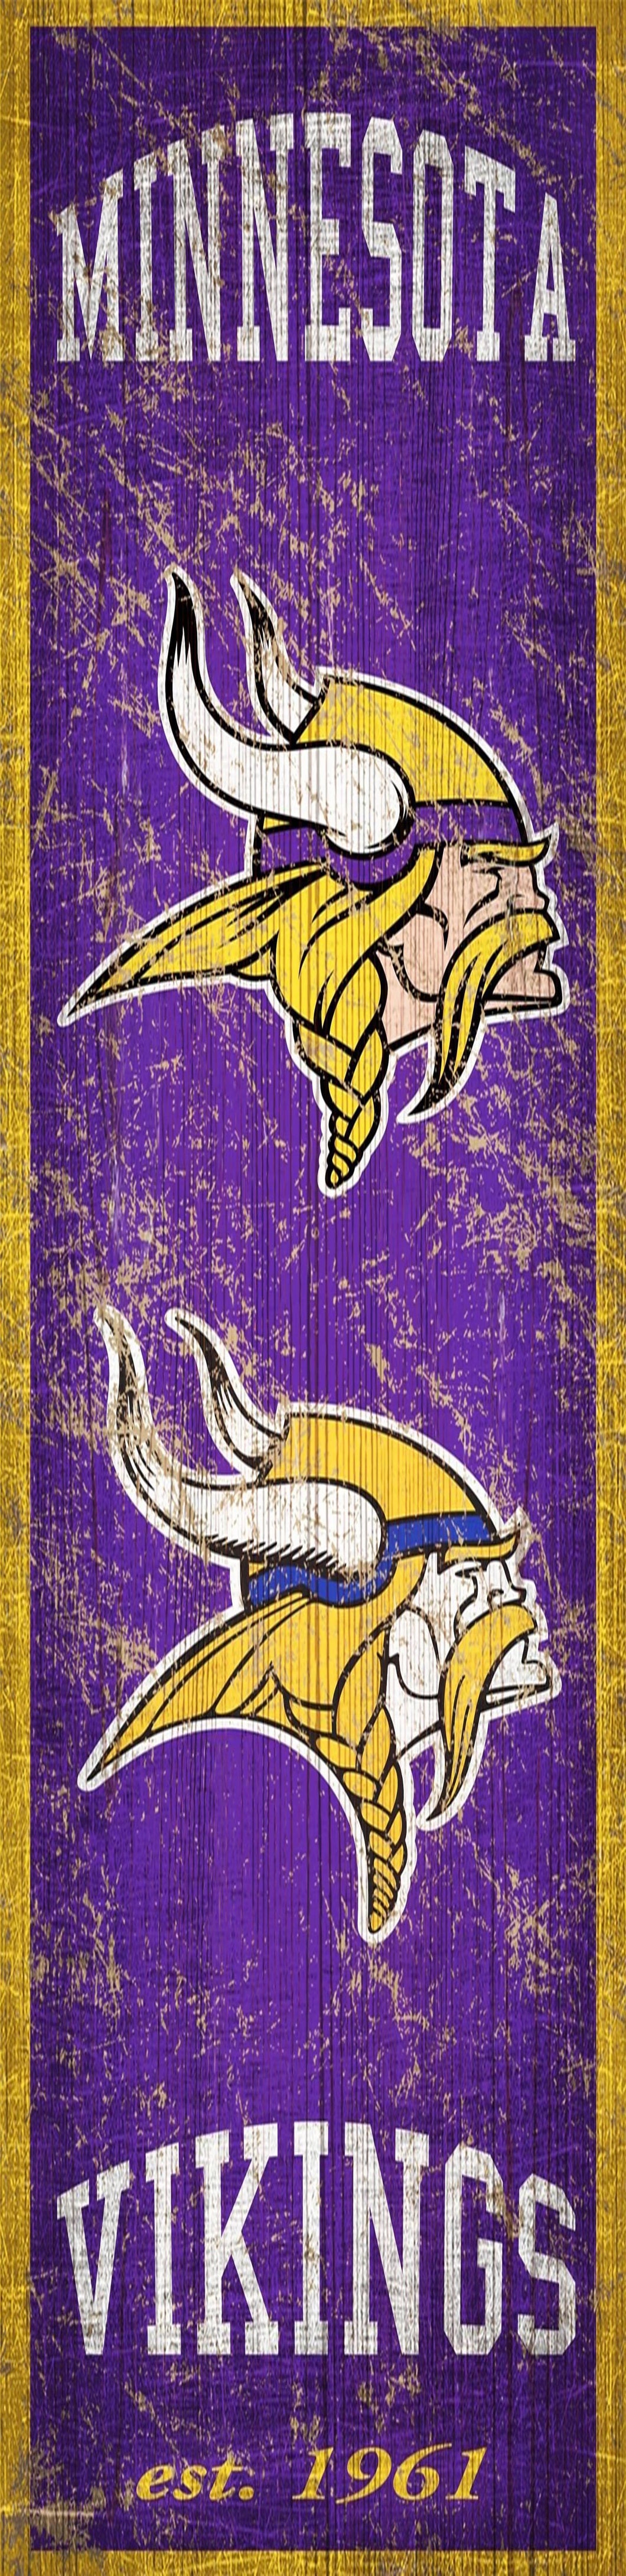 Minnesota Vikings Heritage Banner Vertical Sign - 6